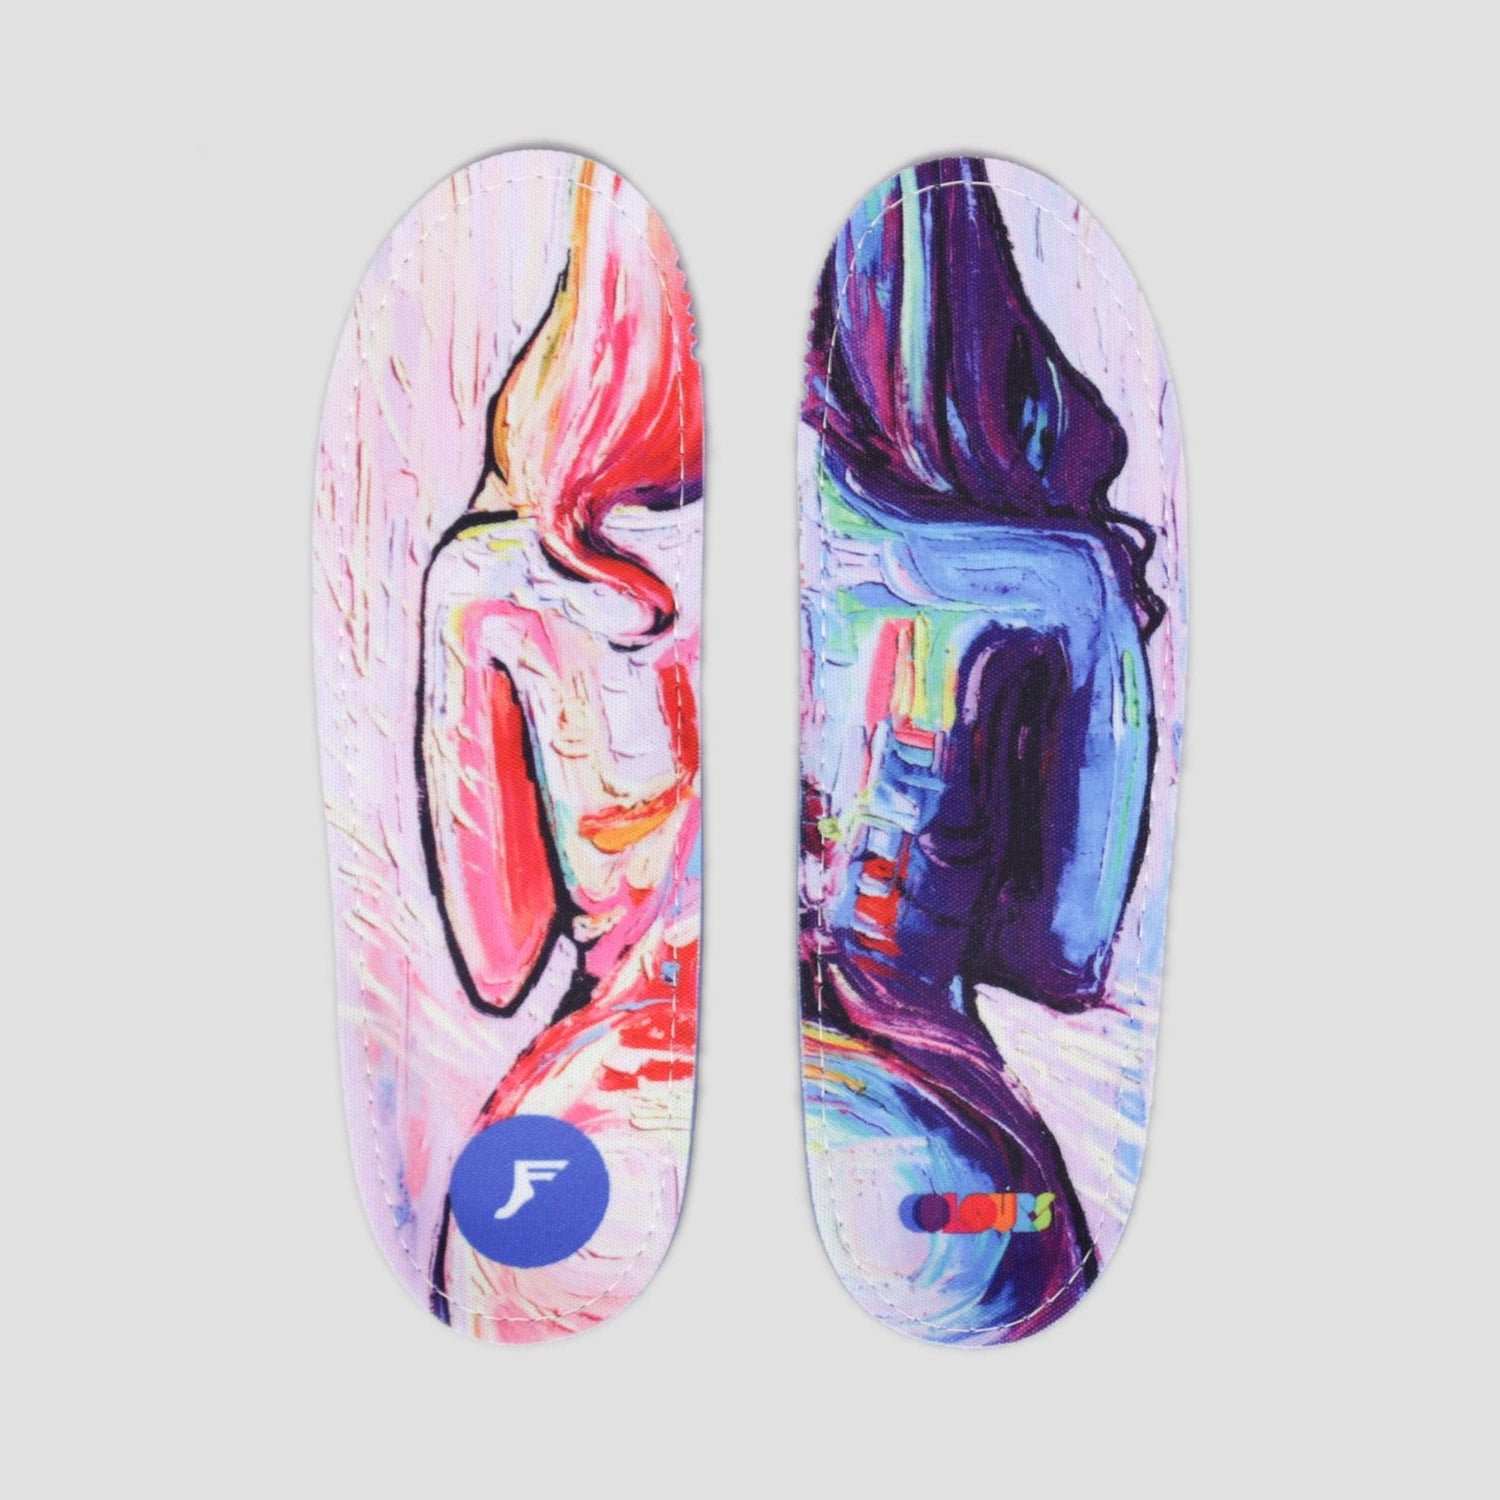 Footprint Skateboard Insoles